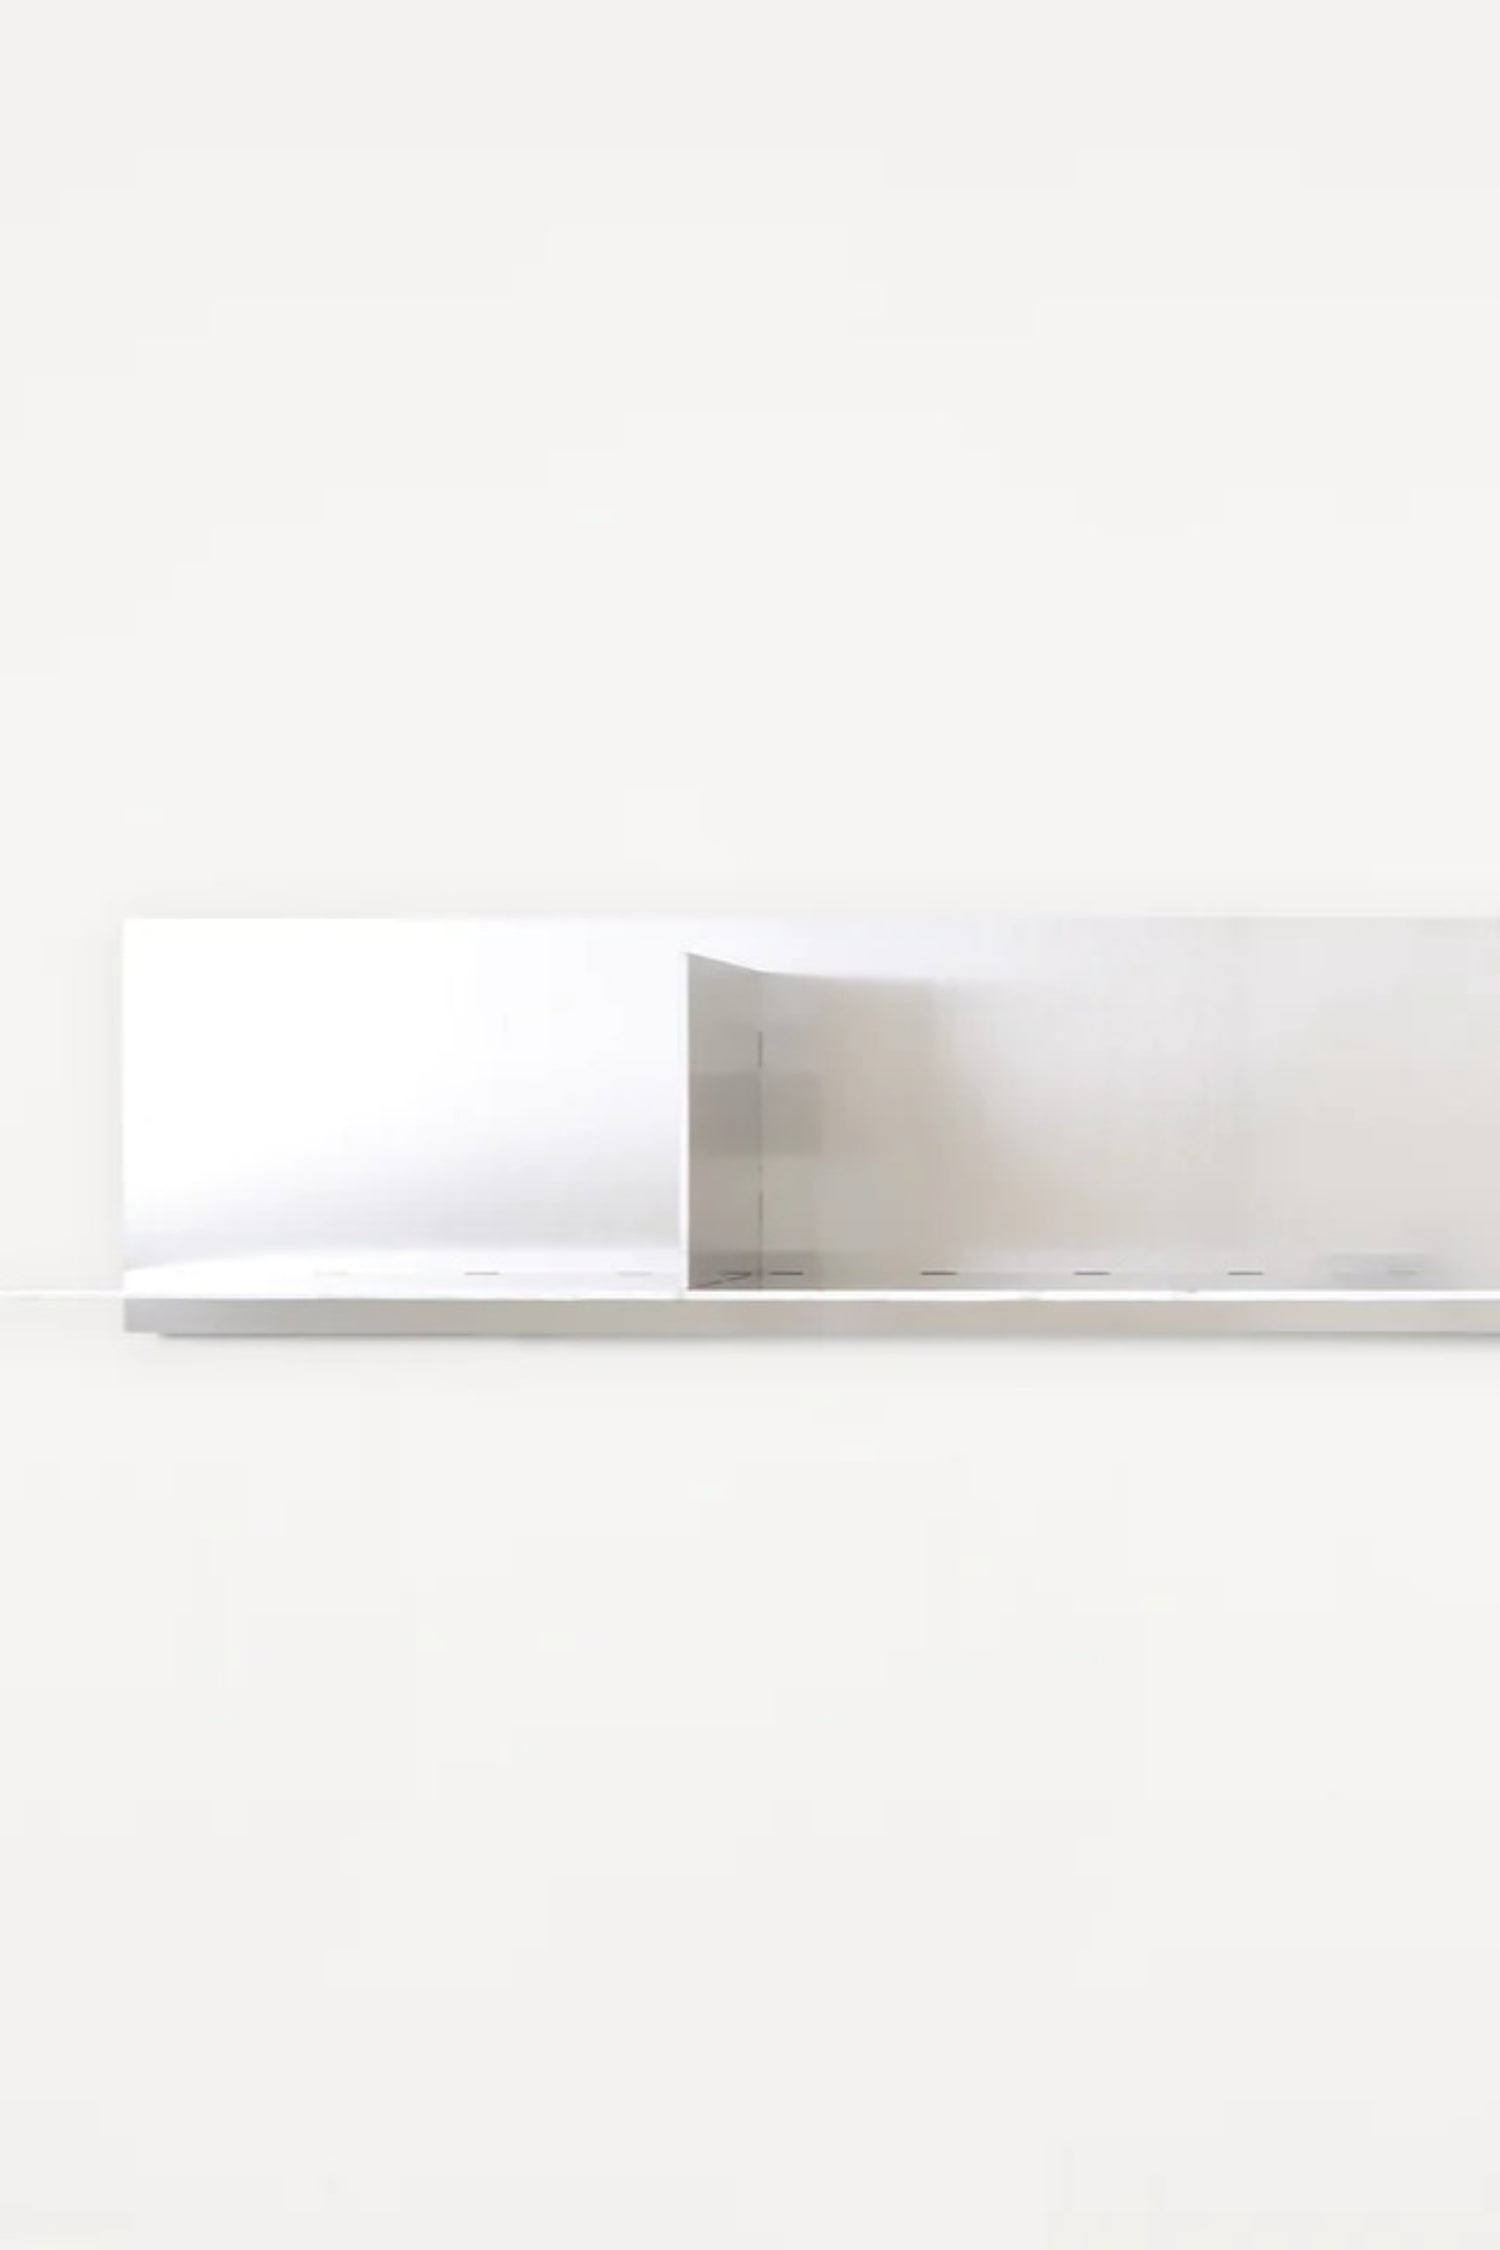 Rivet Shelf designed by Jonas Trampedach for Frama product photo